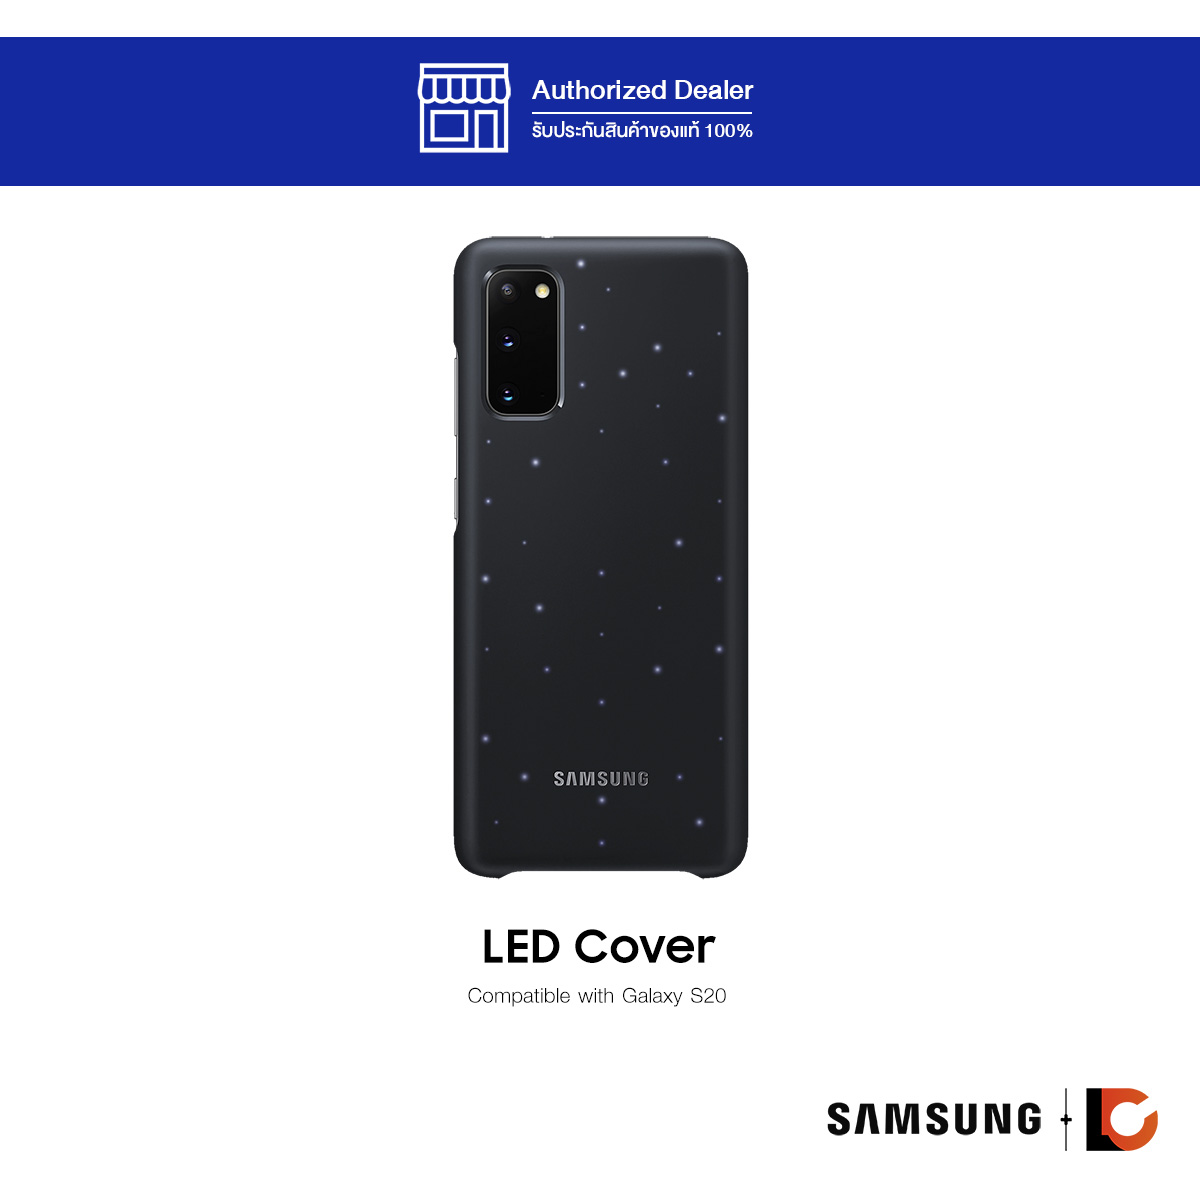 SAMSUNG Galaxy S20 LED Cover | เคสสำหรับ Galaxy S20 LED Cover *ไม่รวมตัวเครื่อง สี BLACK สี BLACKรูปแบบรุ่นที่ีรองรับ Samsung Galaxy S20